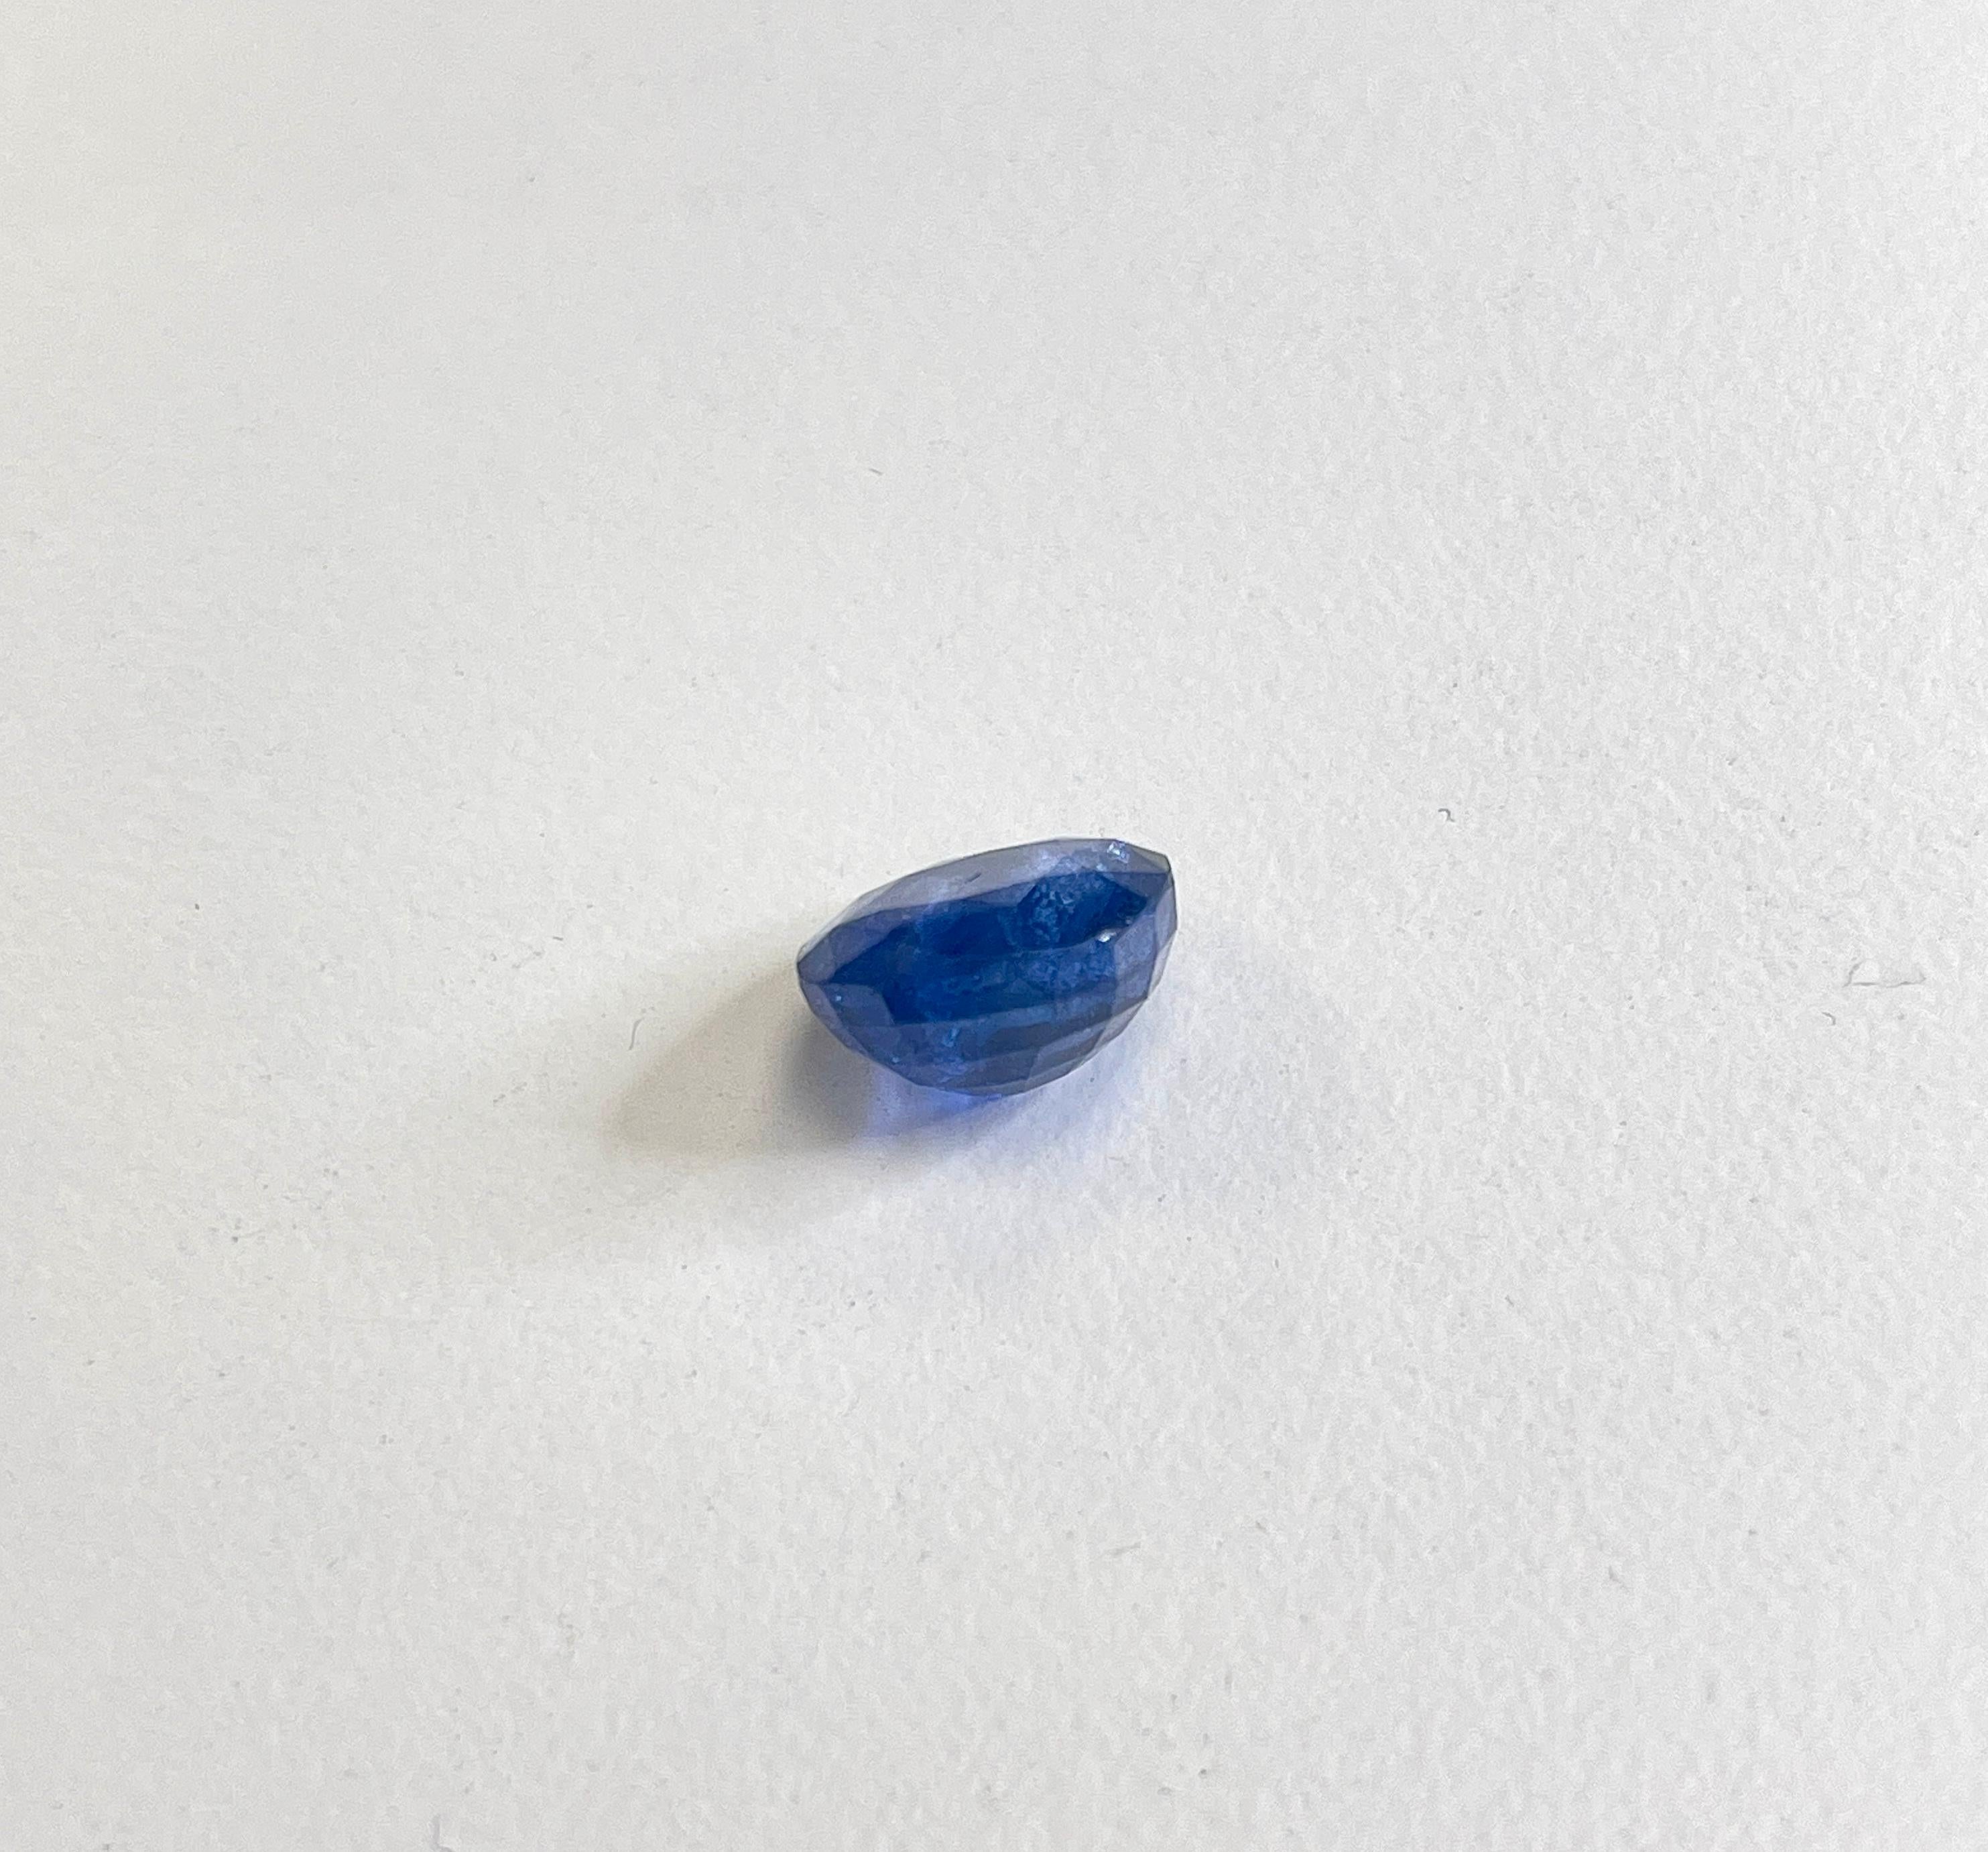 7.58 Carat Radiant Cut Intense Blue Natural Sapphire Loose Gemstone For Sale 2